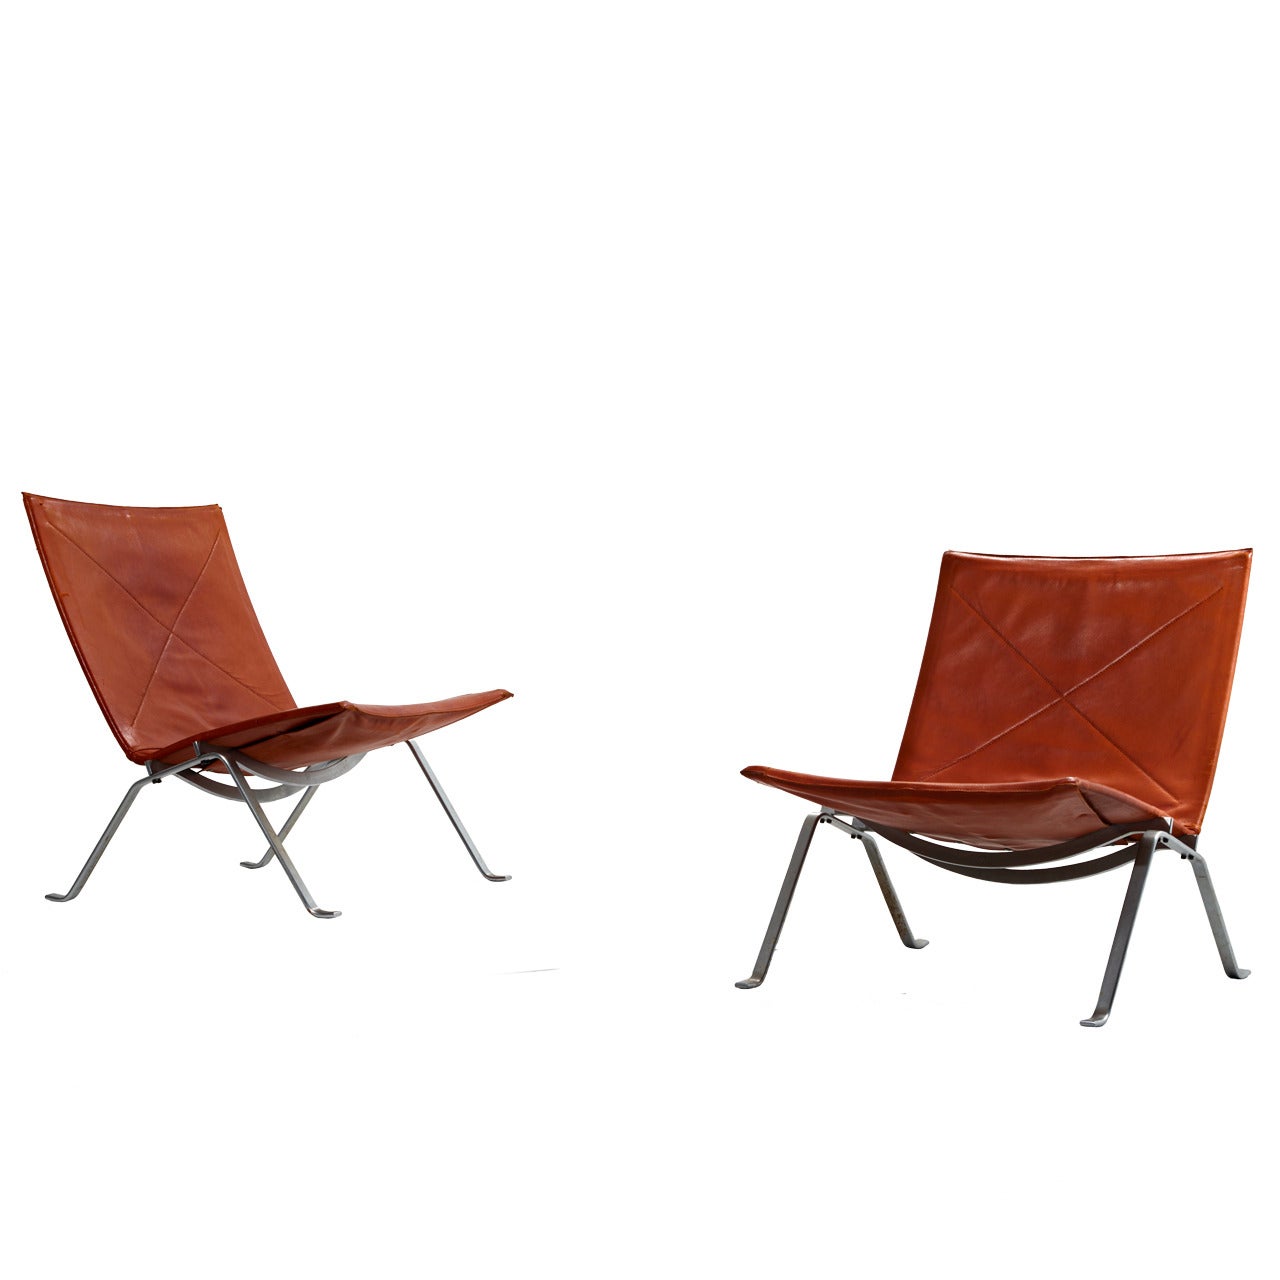 Poul Kjaerholm PK 22 Chairs for E. Kold Christensen, Original Condition 1956